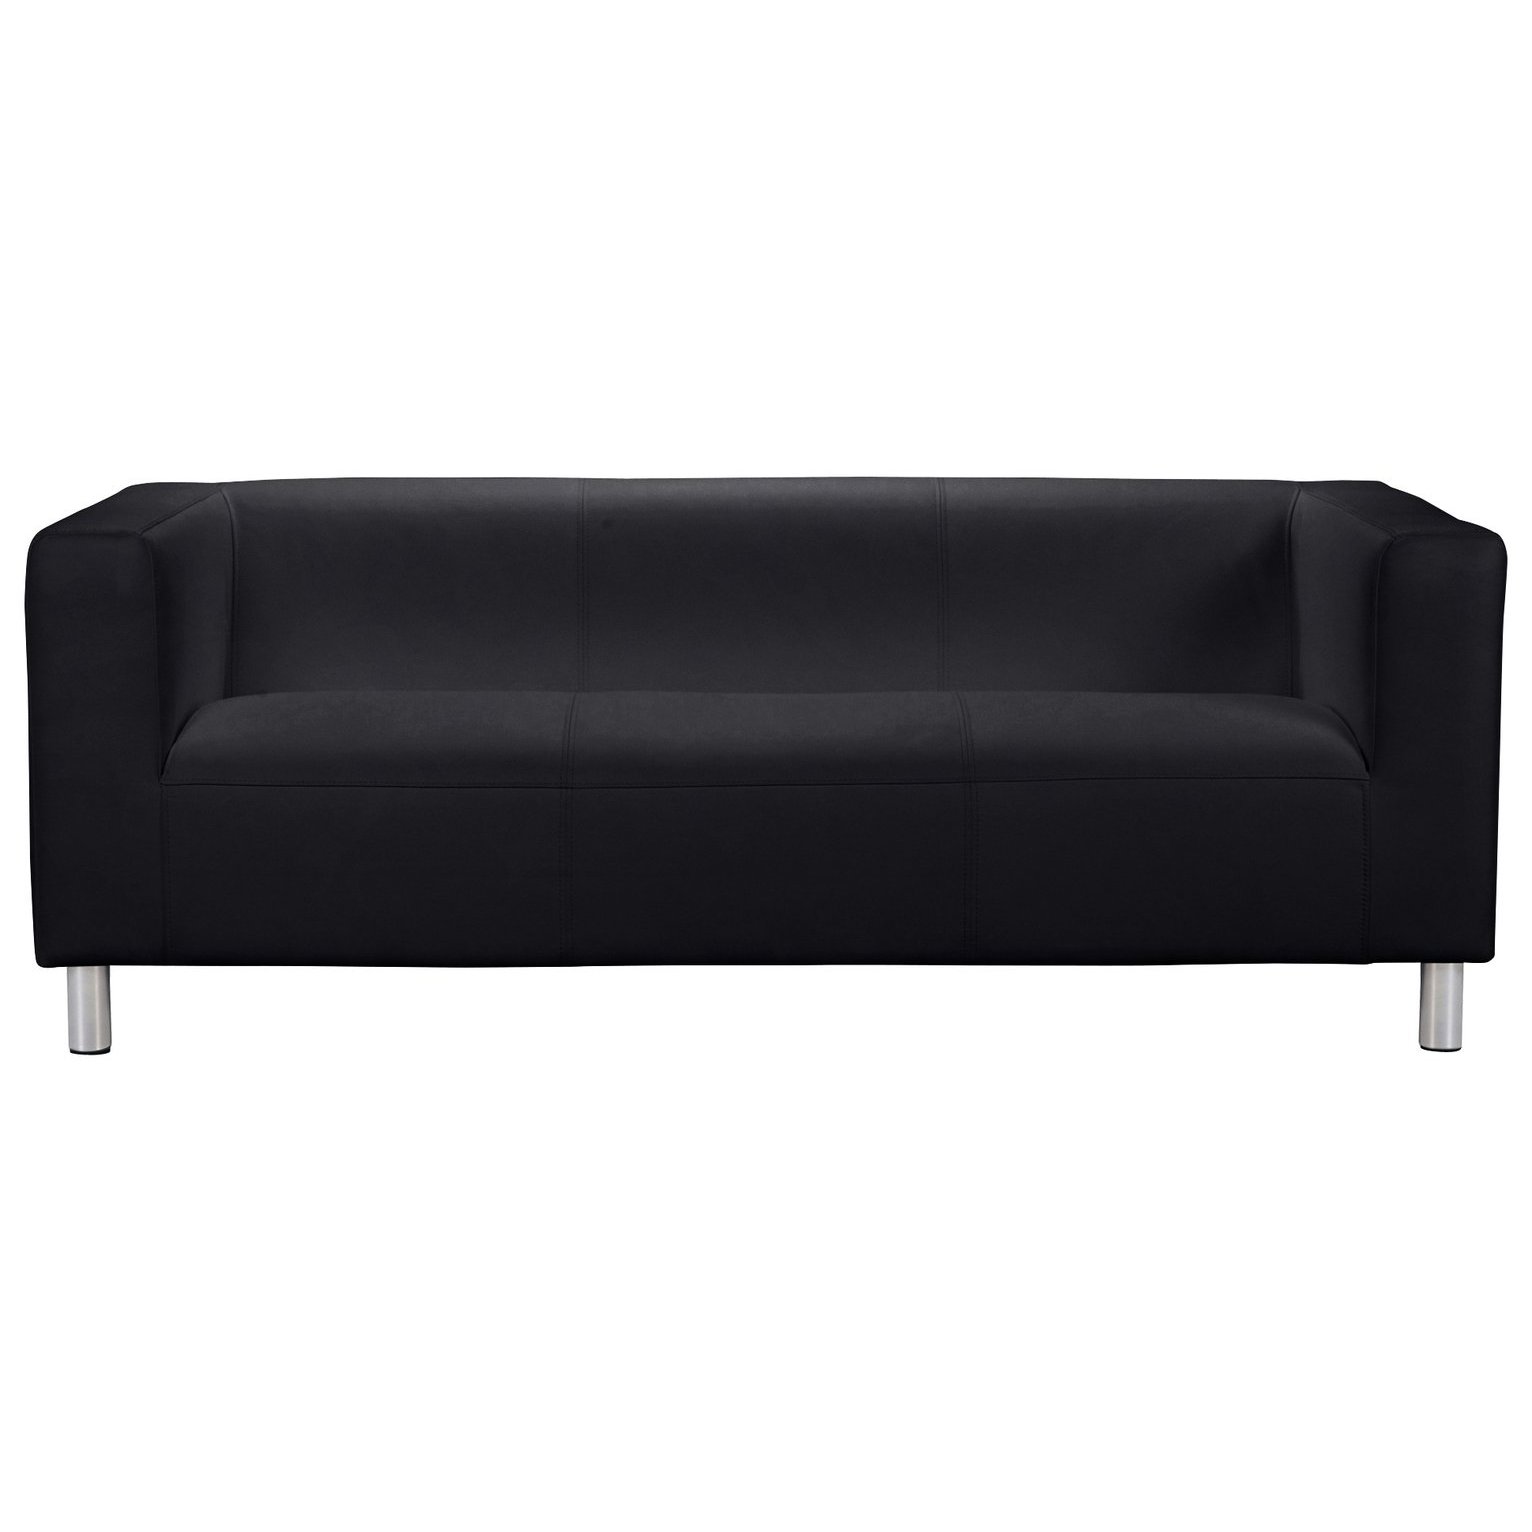 Argos Home Moda 3 Seater Fabric Sofa - Black